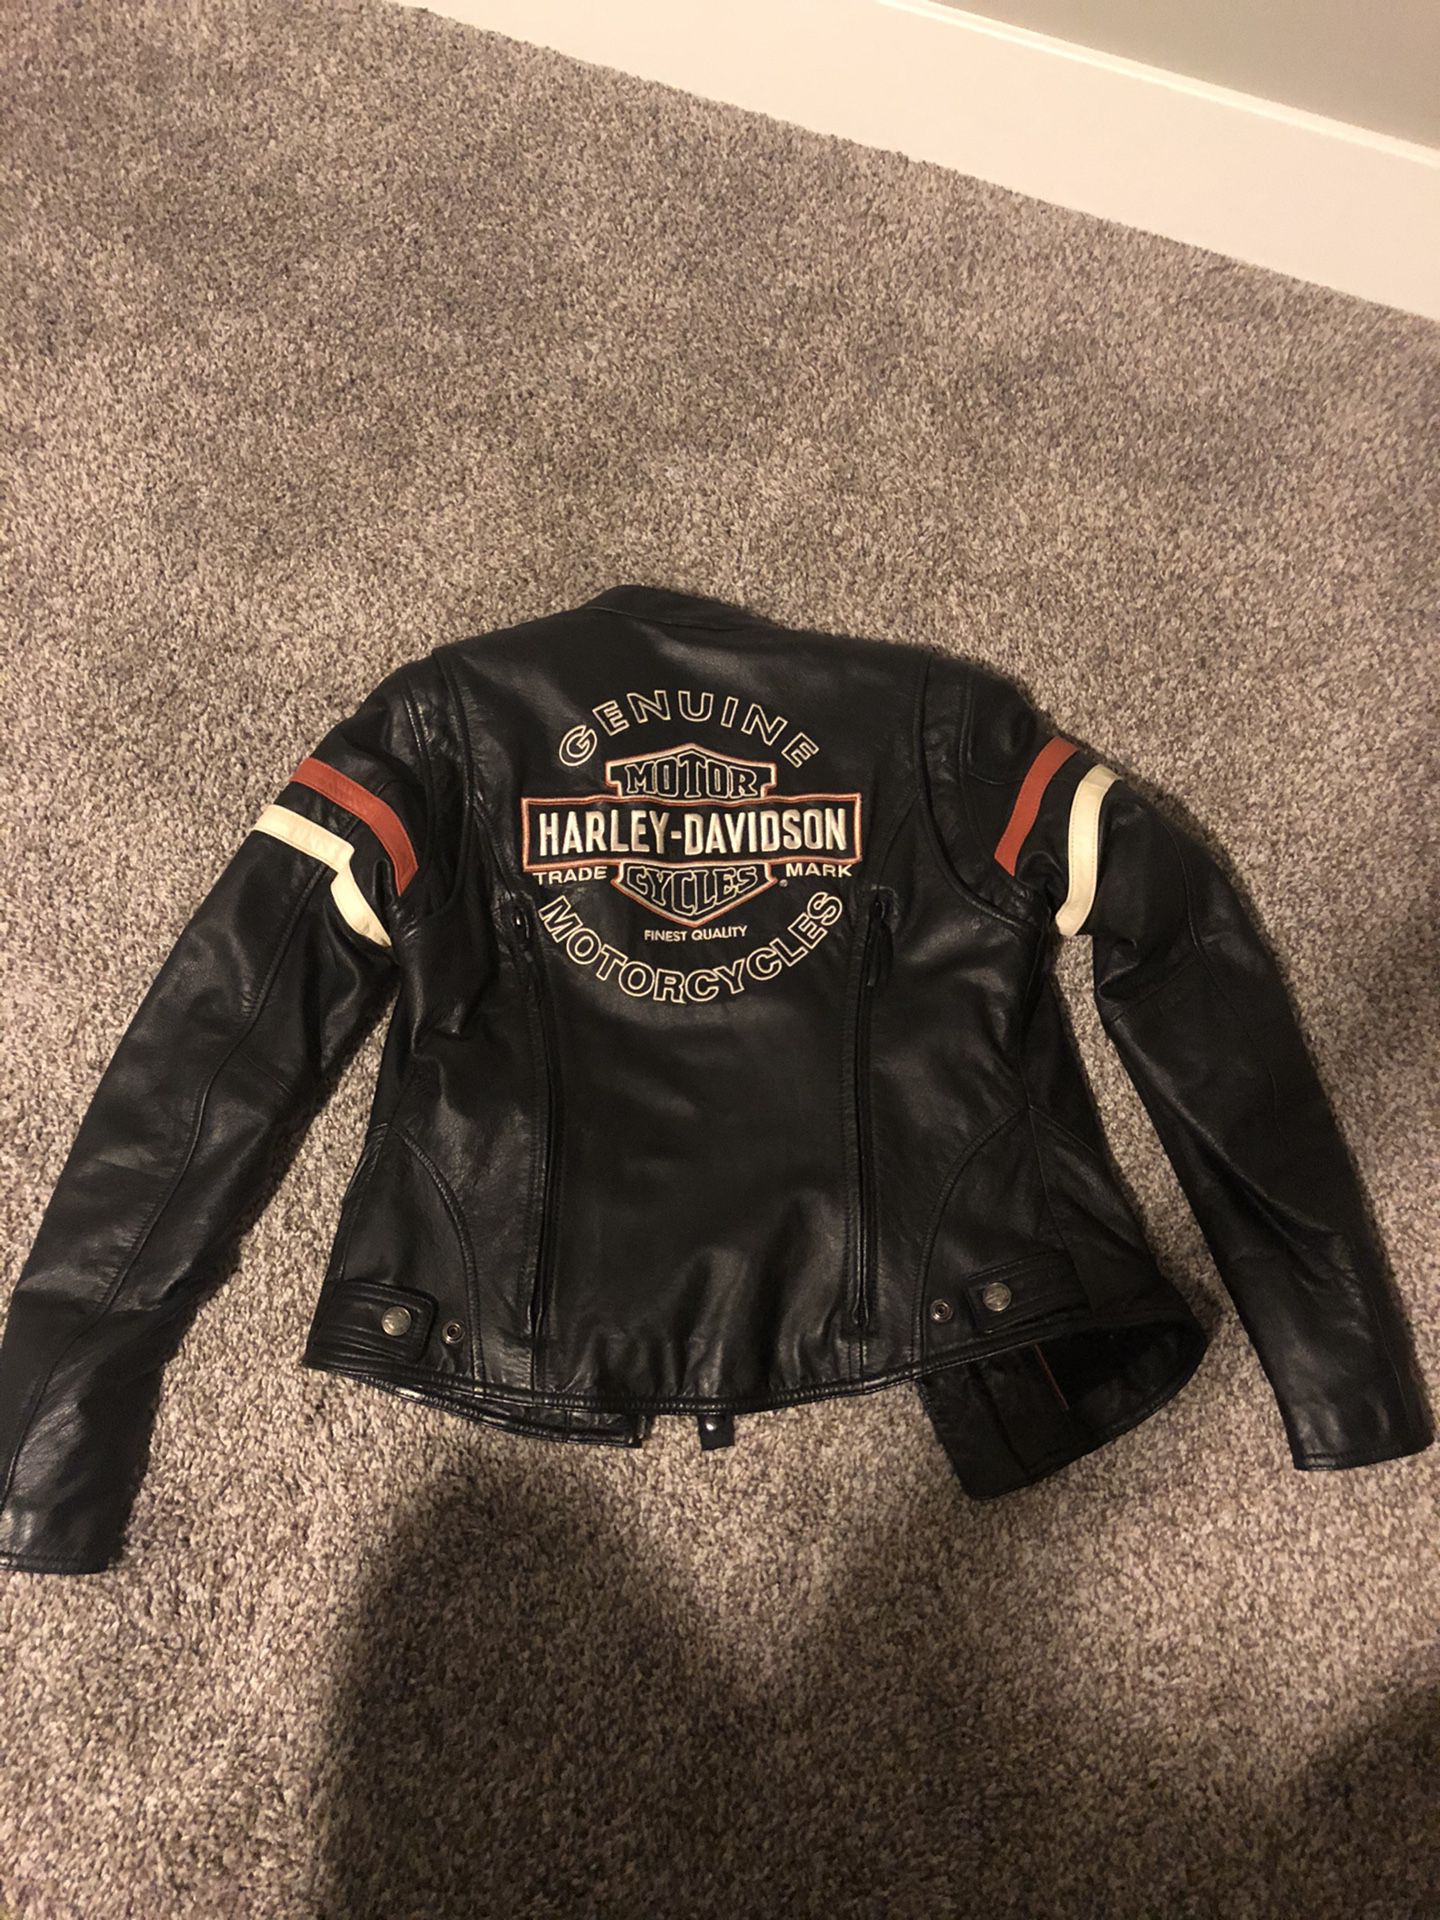 Women’s Harley Davidson Motorcycle Jacket size small